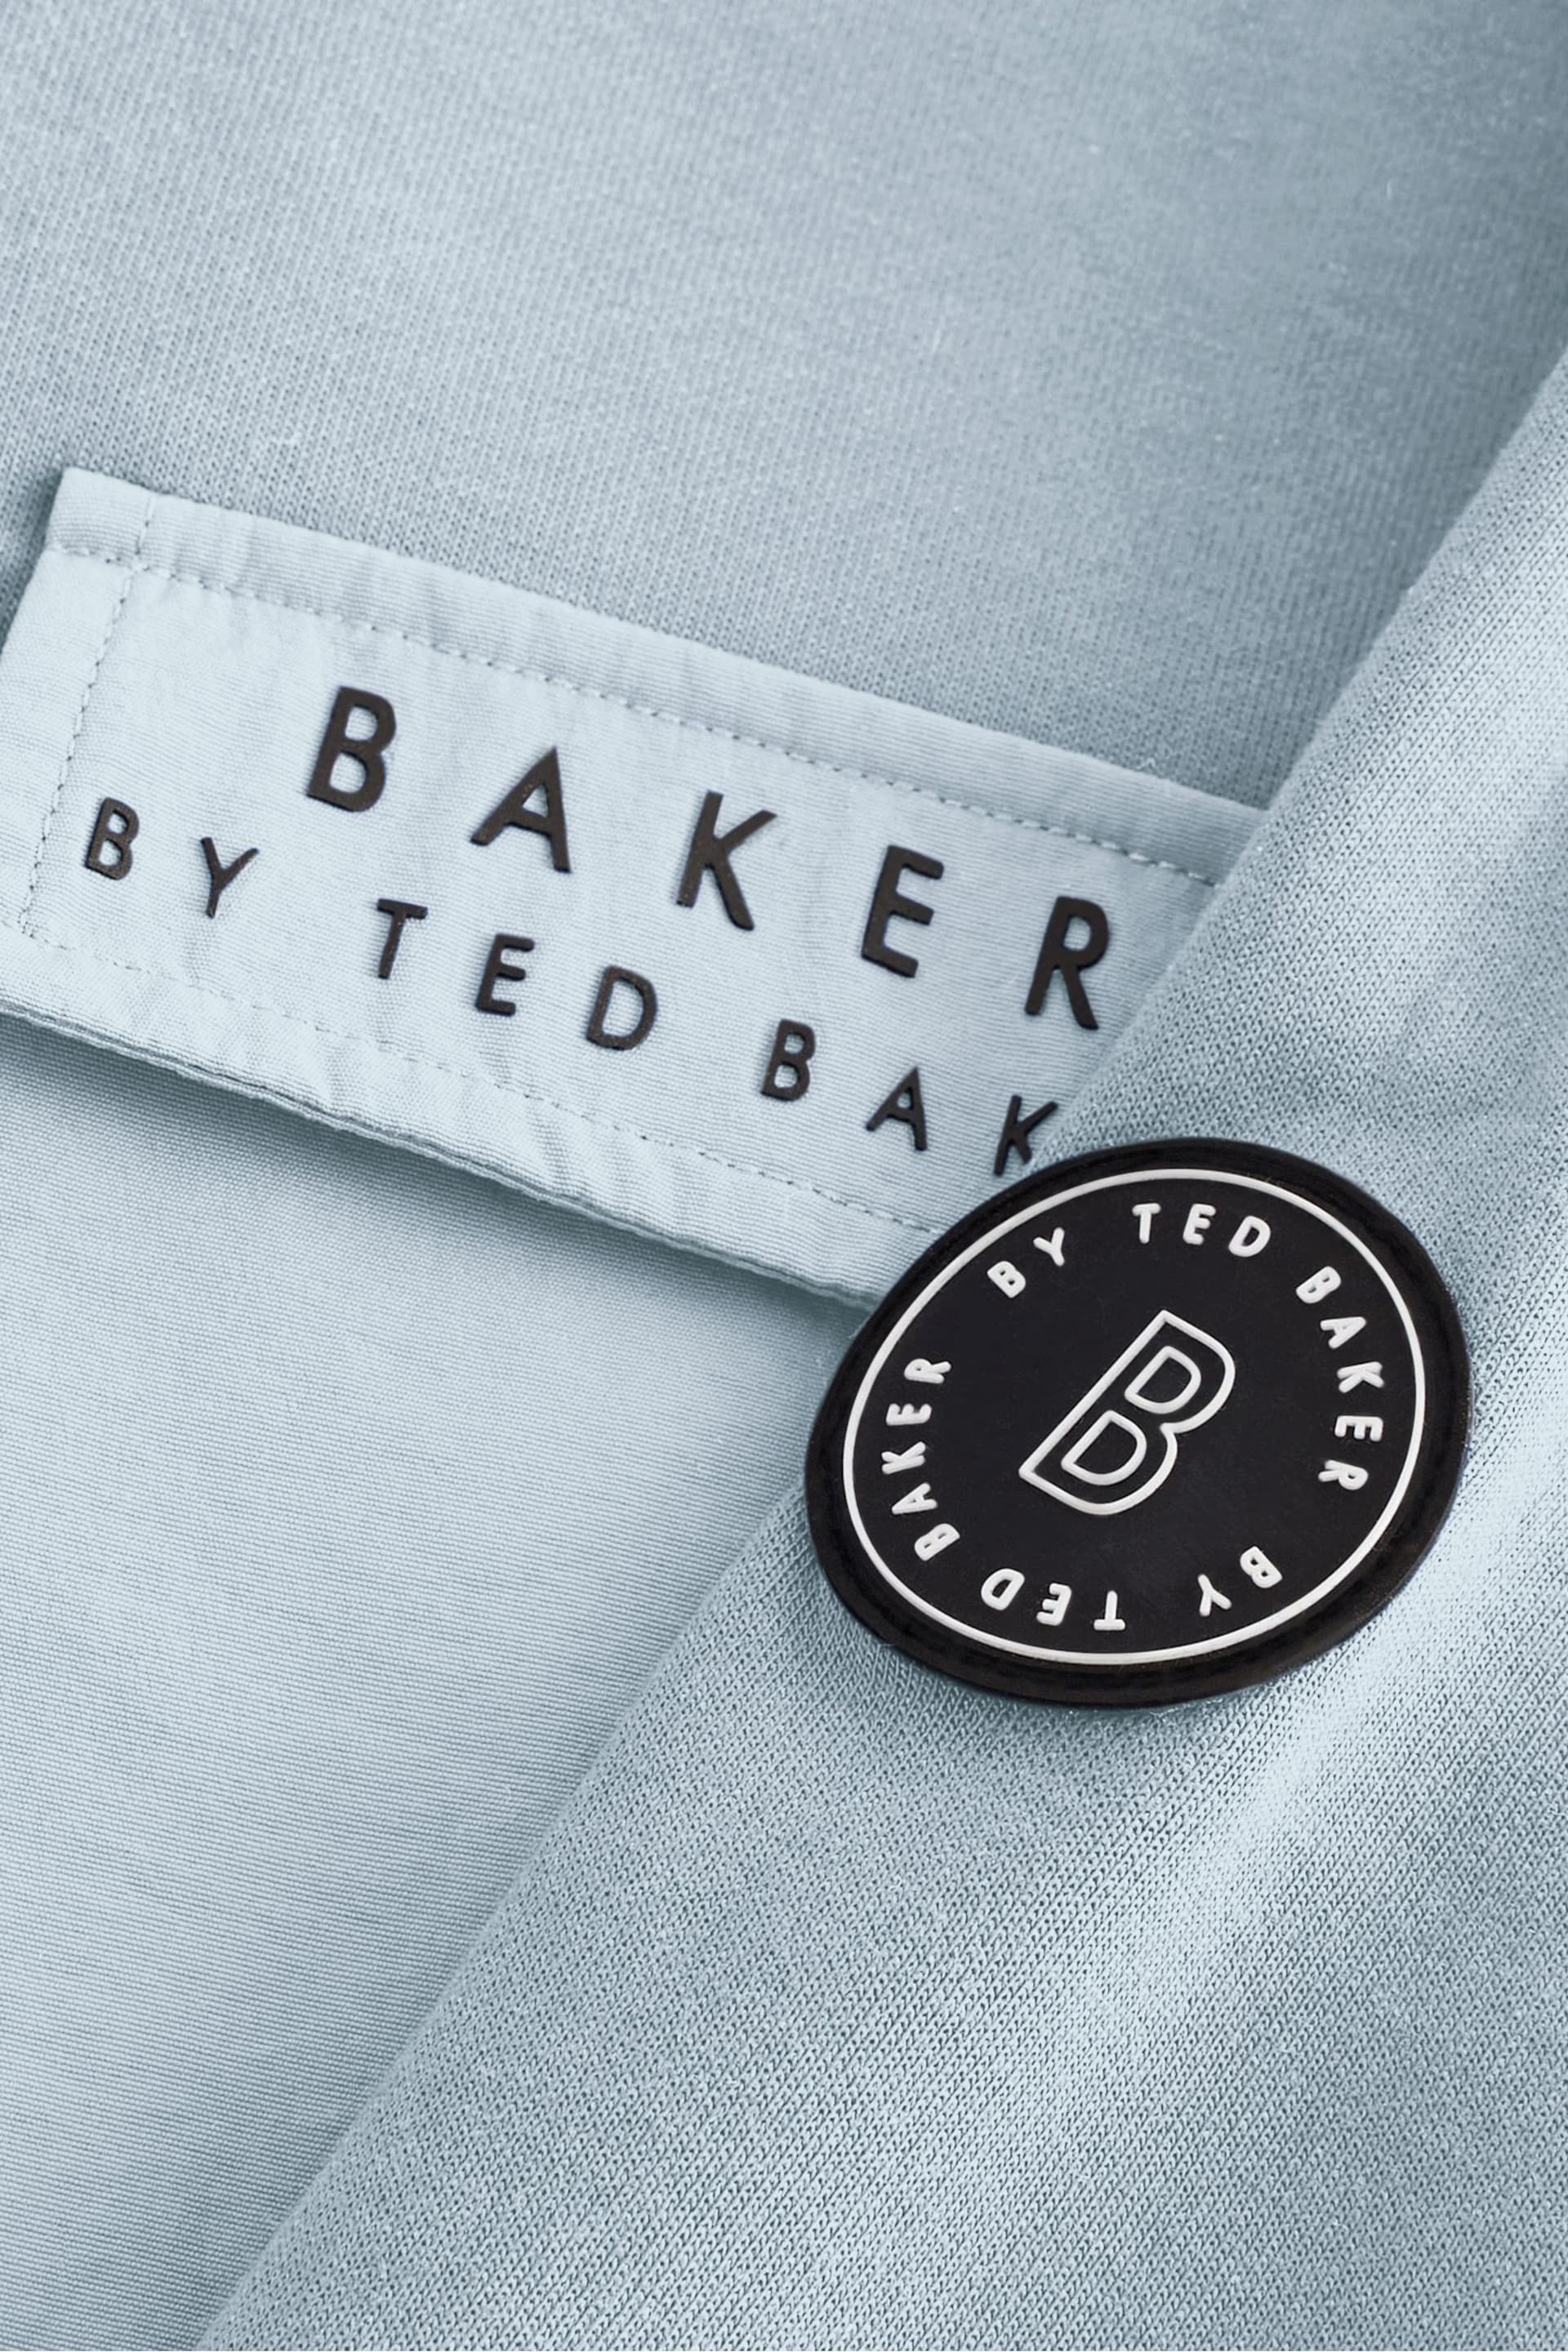 Baker by Ted Baker Long Sleeve Pocket T-Shirt - Image 8 of 10